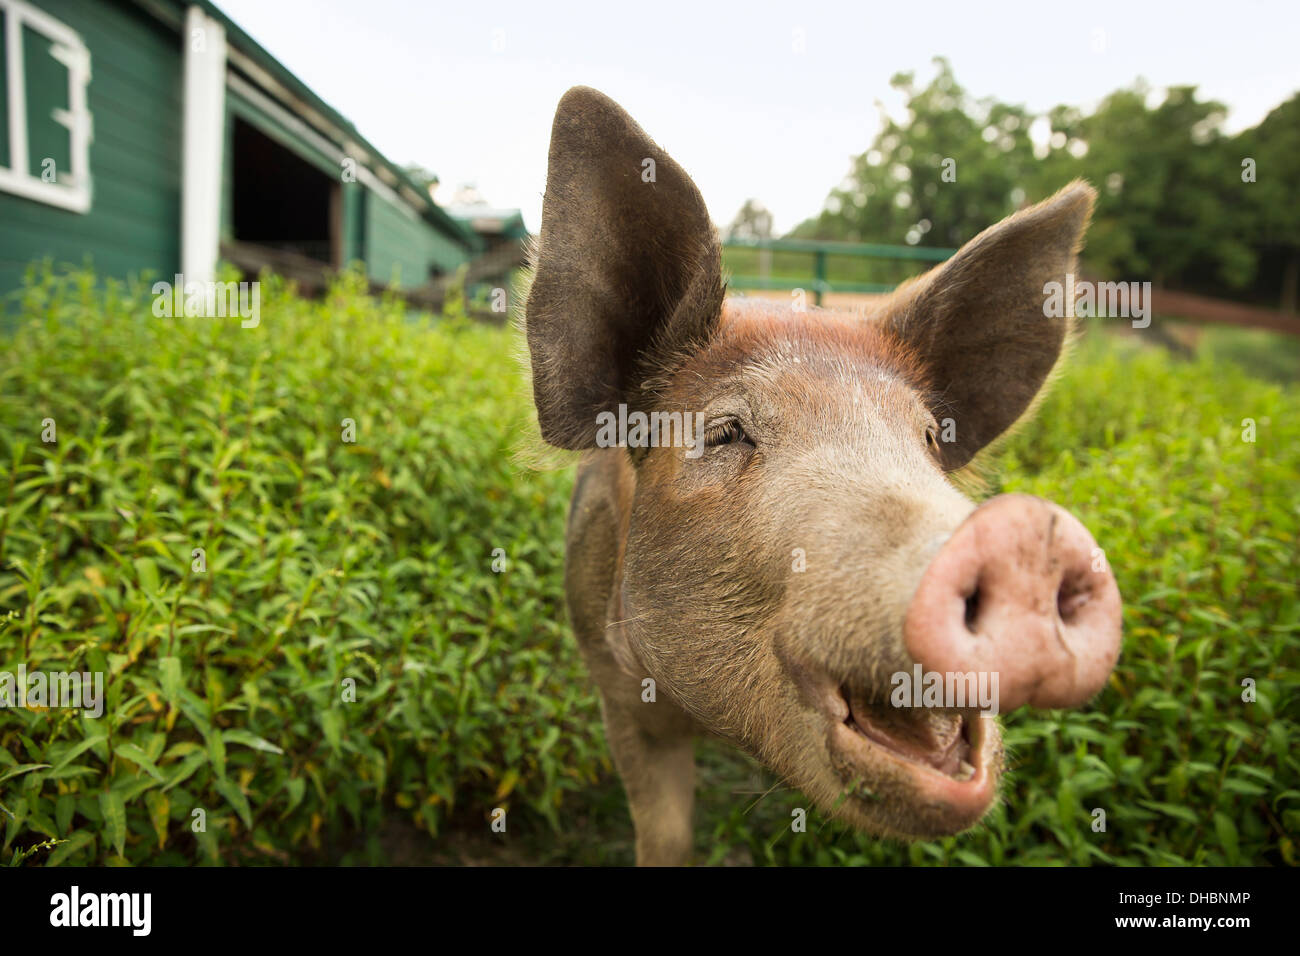 An organic farm in the Catskills. A pig. Stock Photo